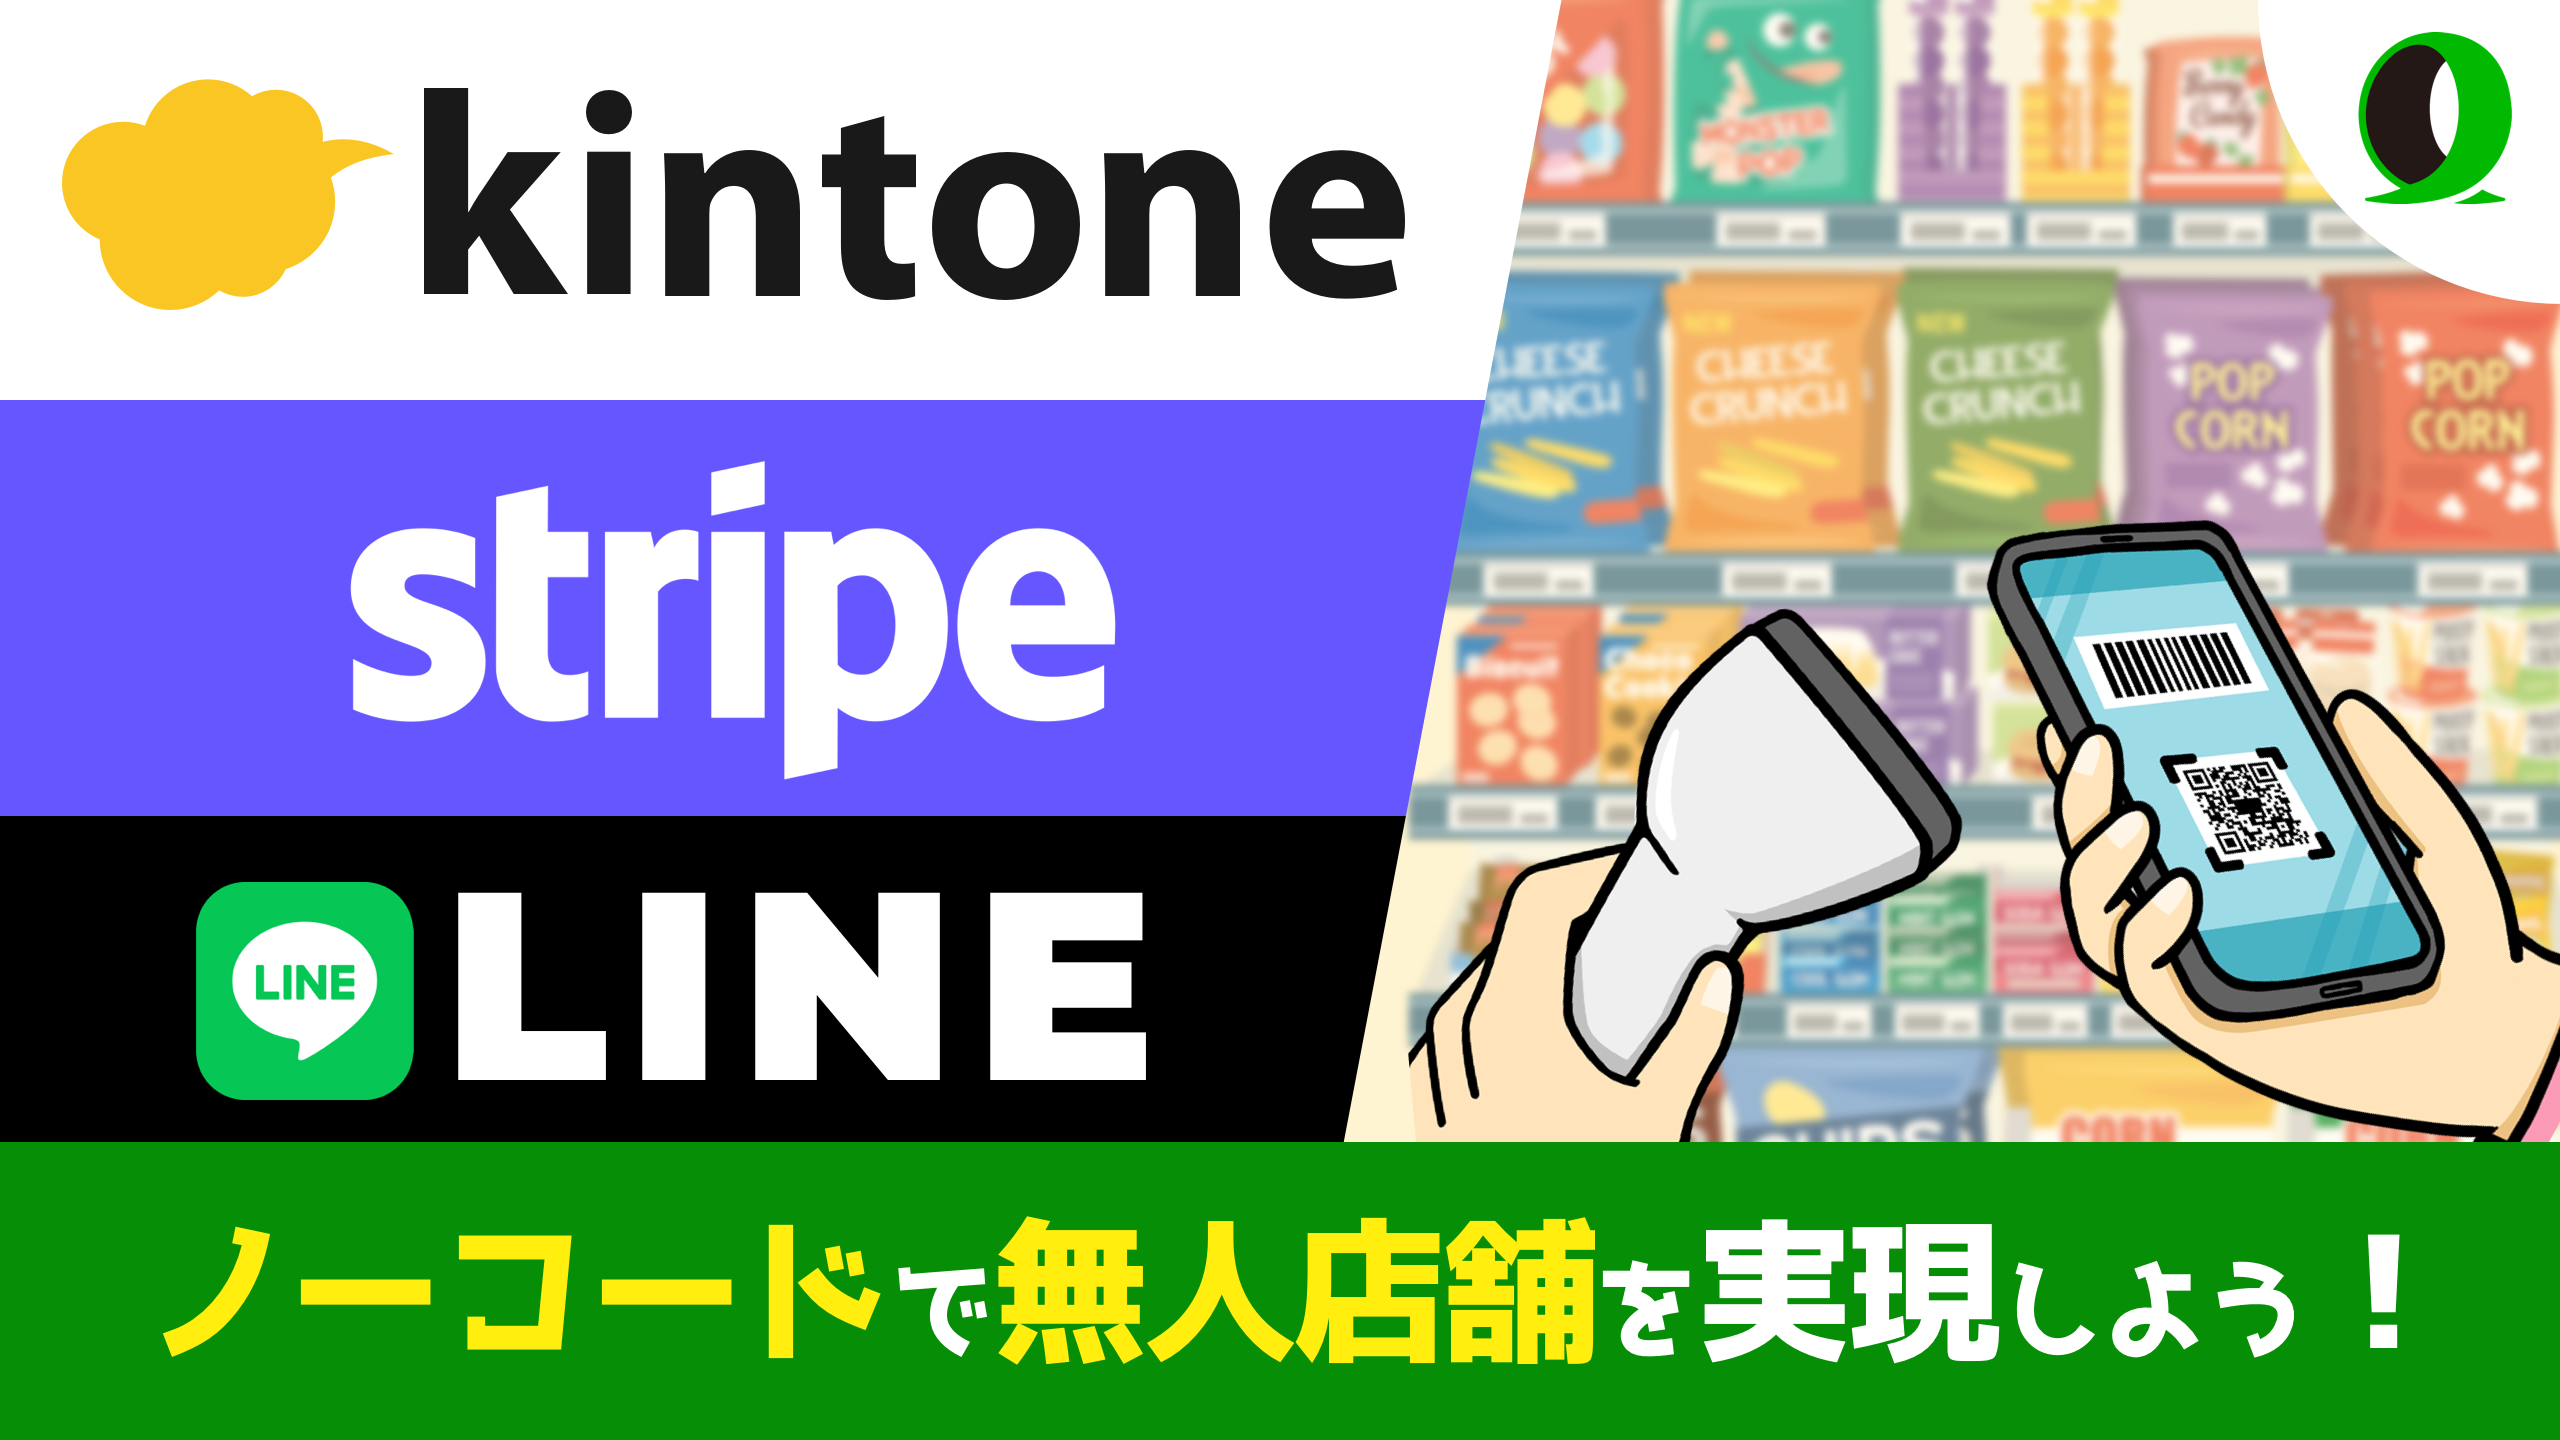 kintone+Stripe+LINEイベントのサムネイル